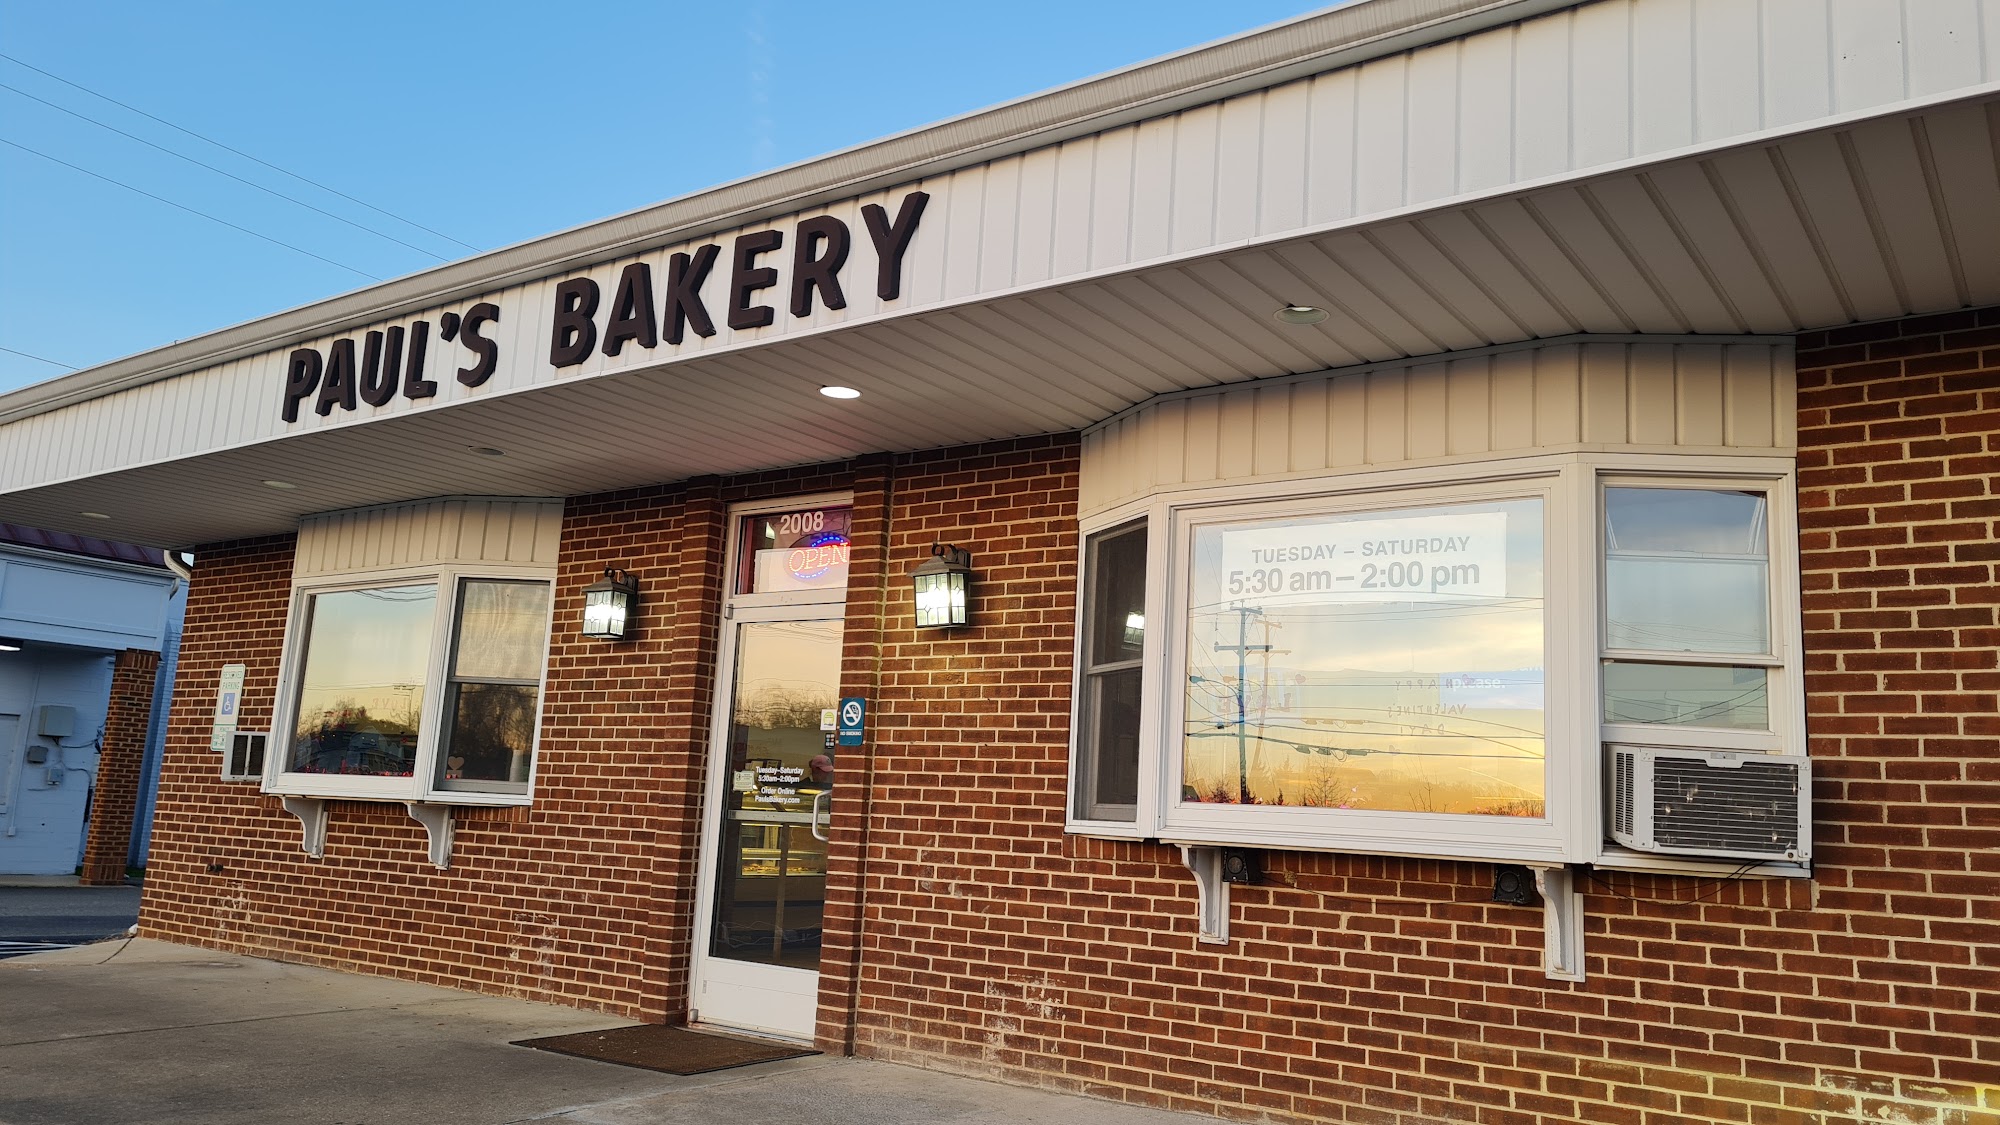 Paul's Bakery